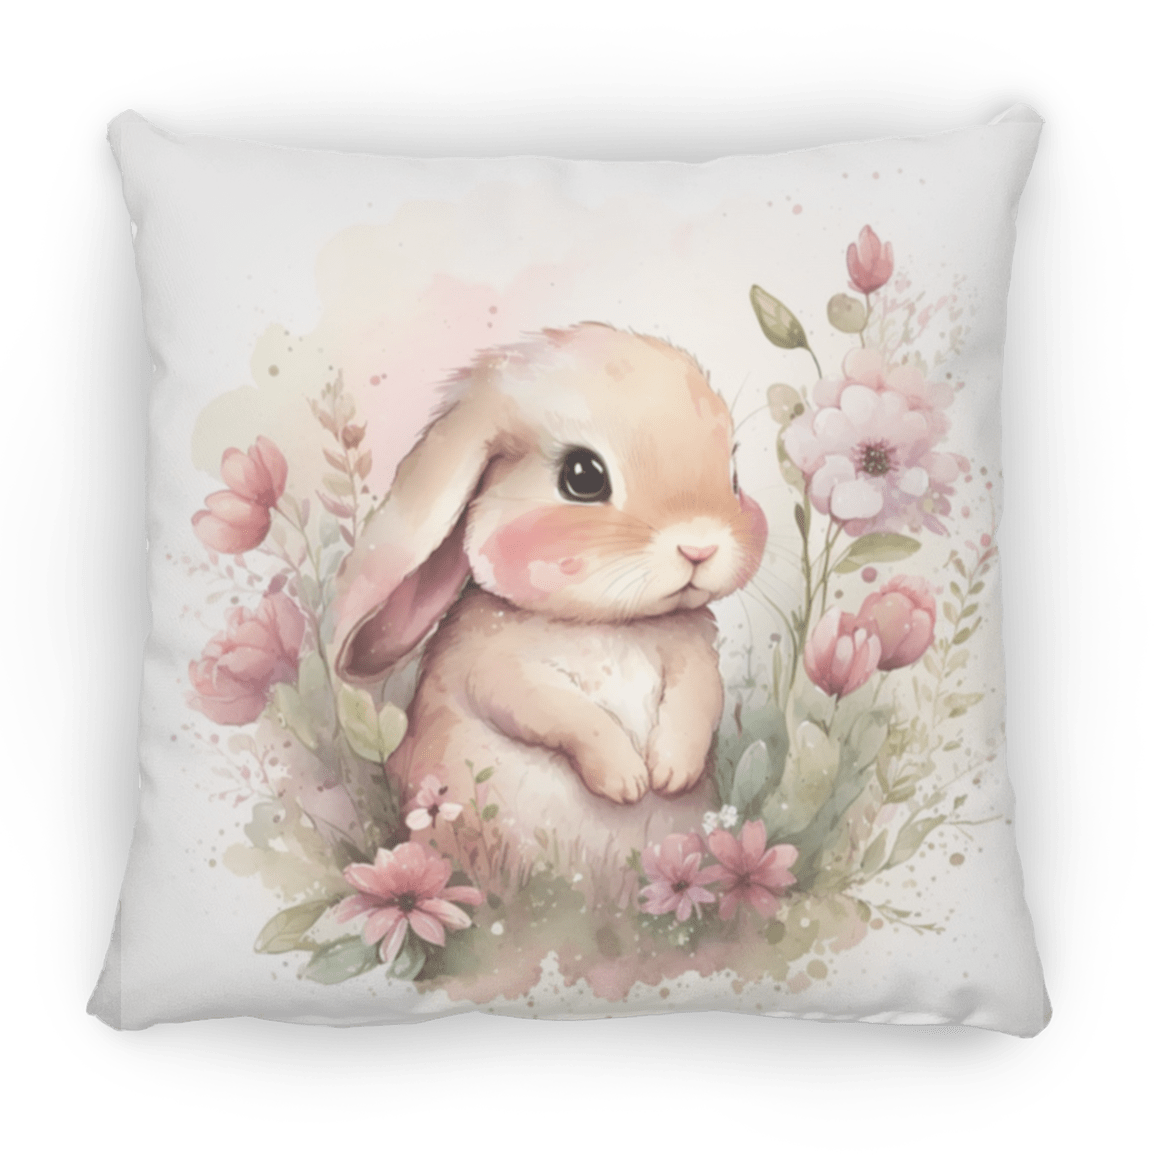 Easter Bunny Medium Square Pillow